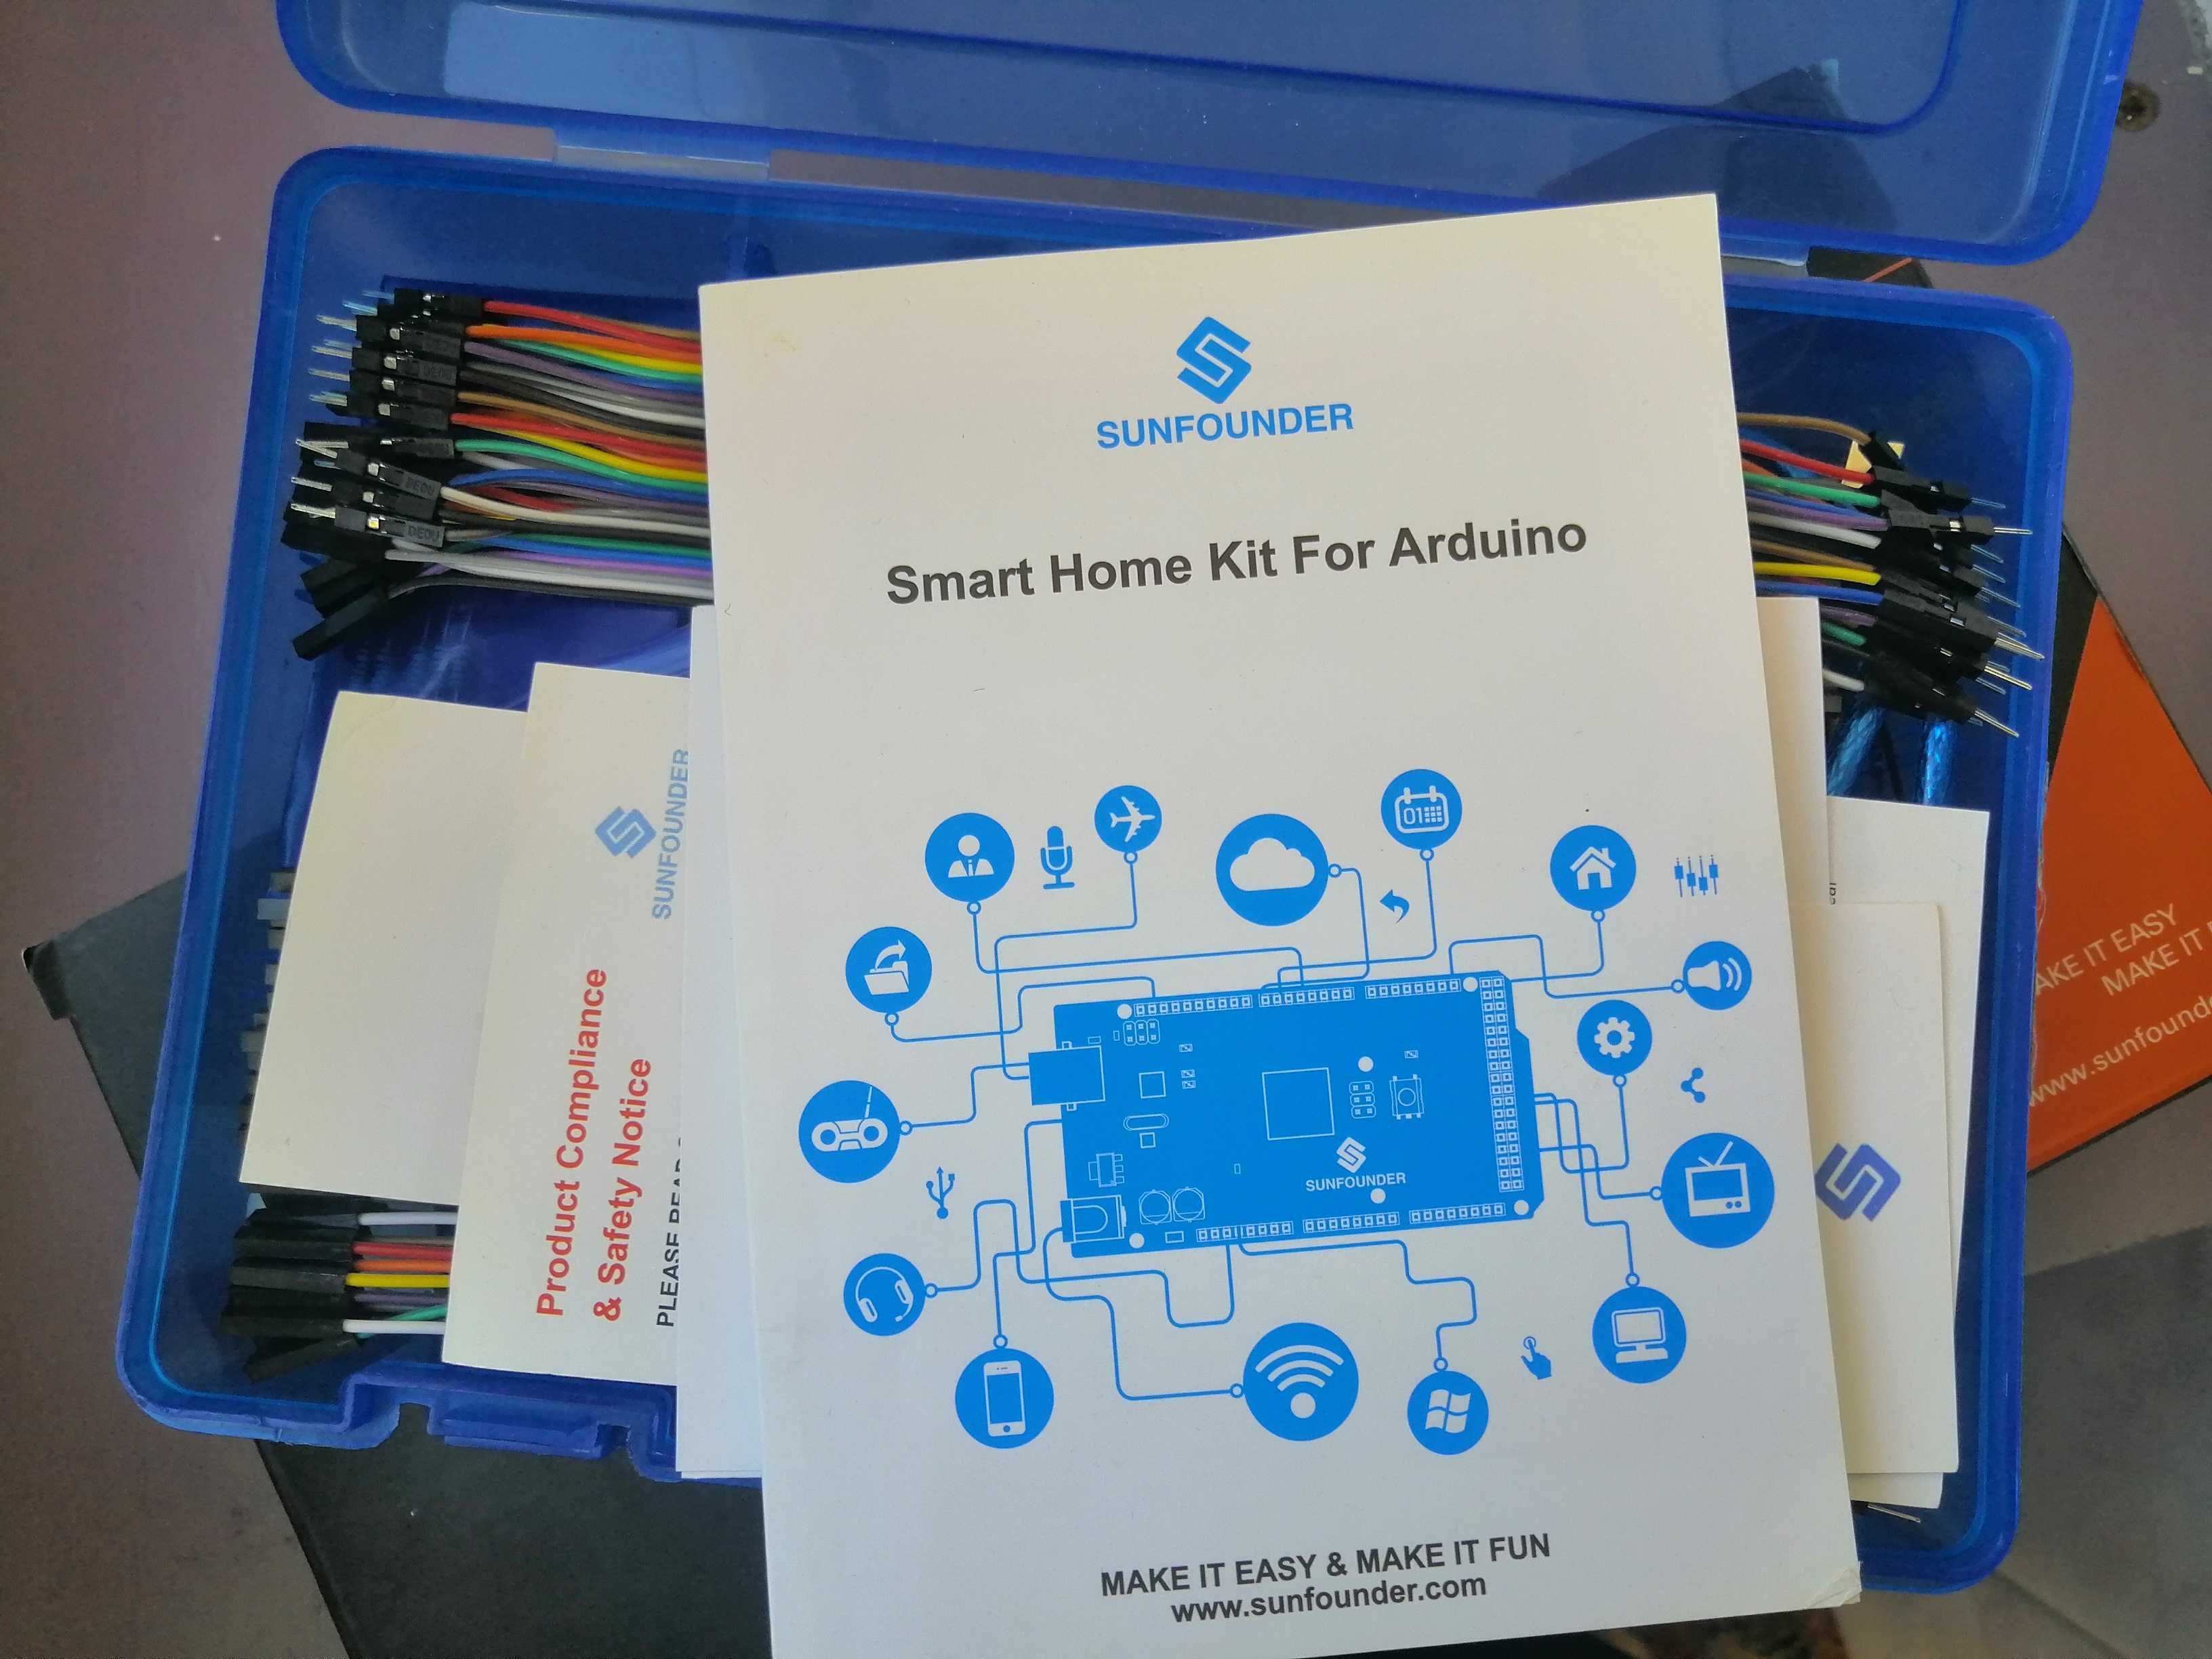 Smart Home Kit For Arduino